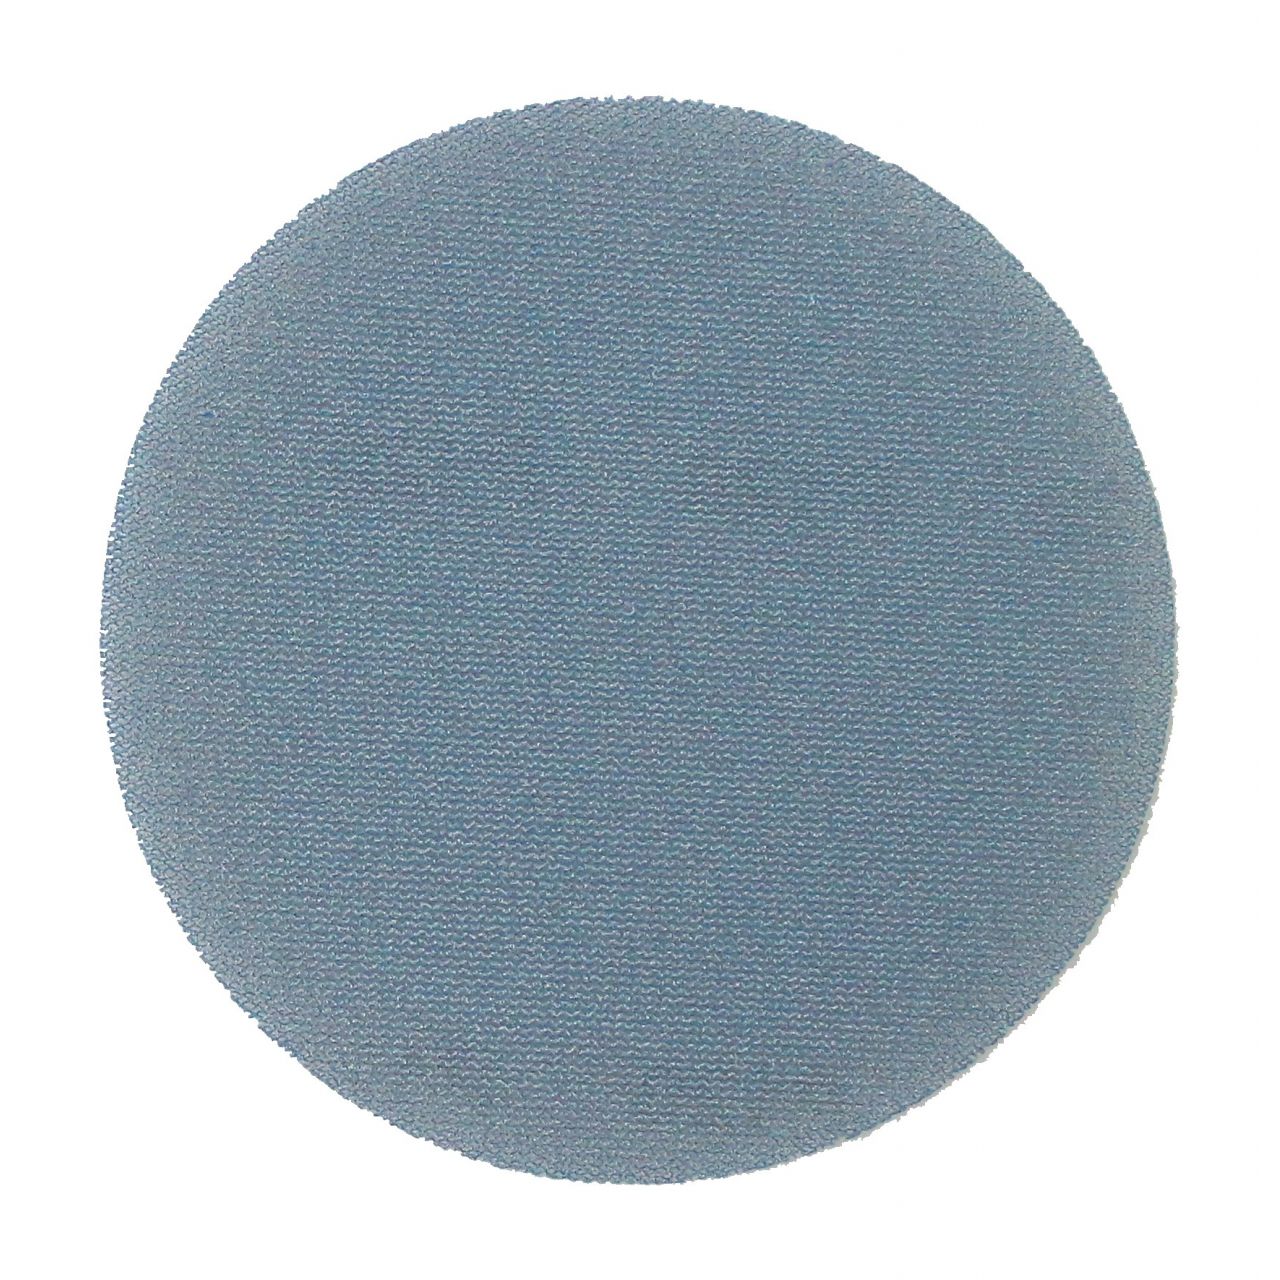 50 Discos de malla abrasiva autoadherente azul MAB (150/120)